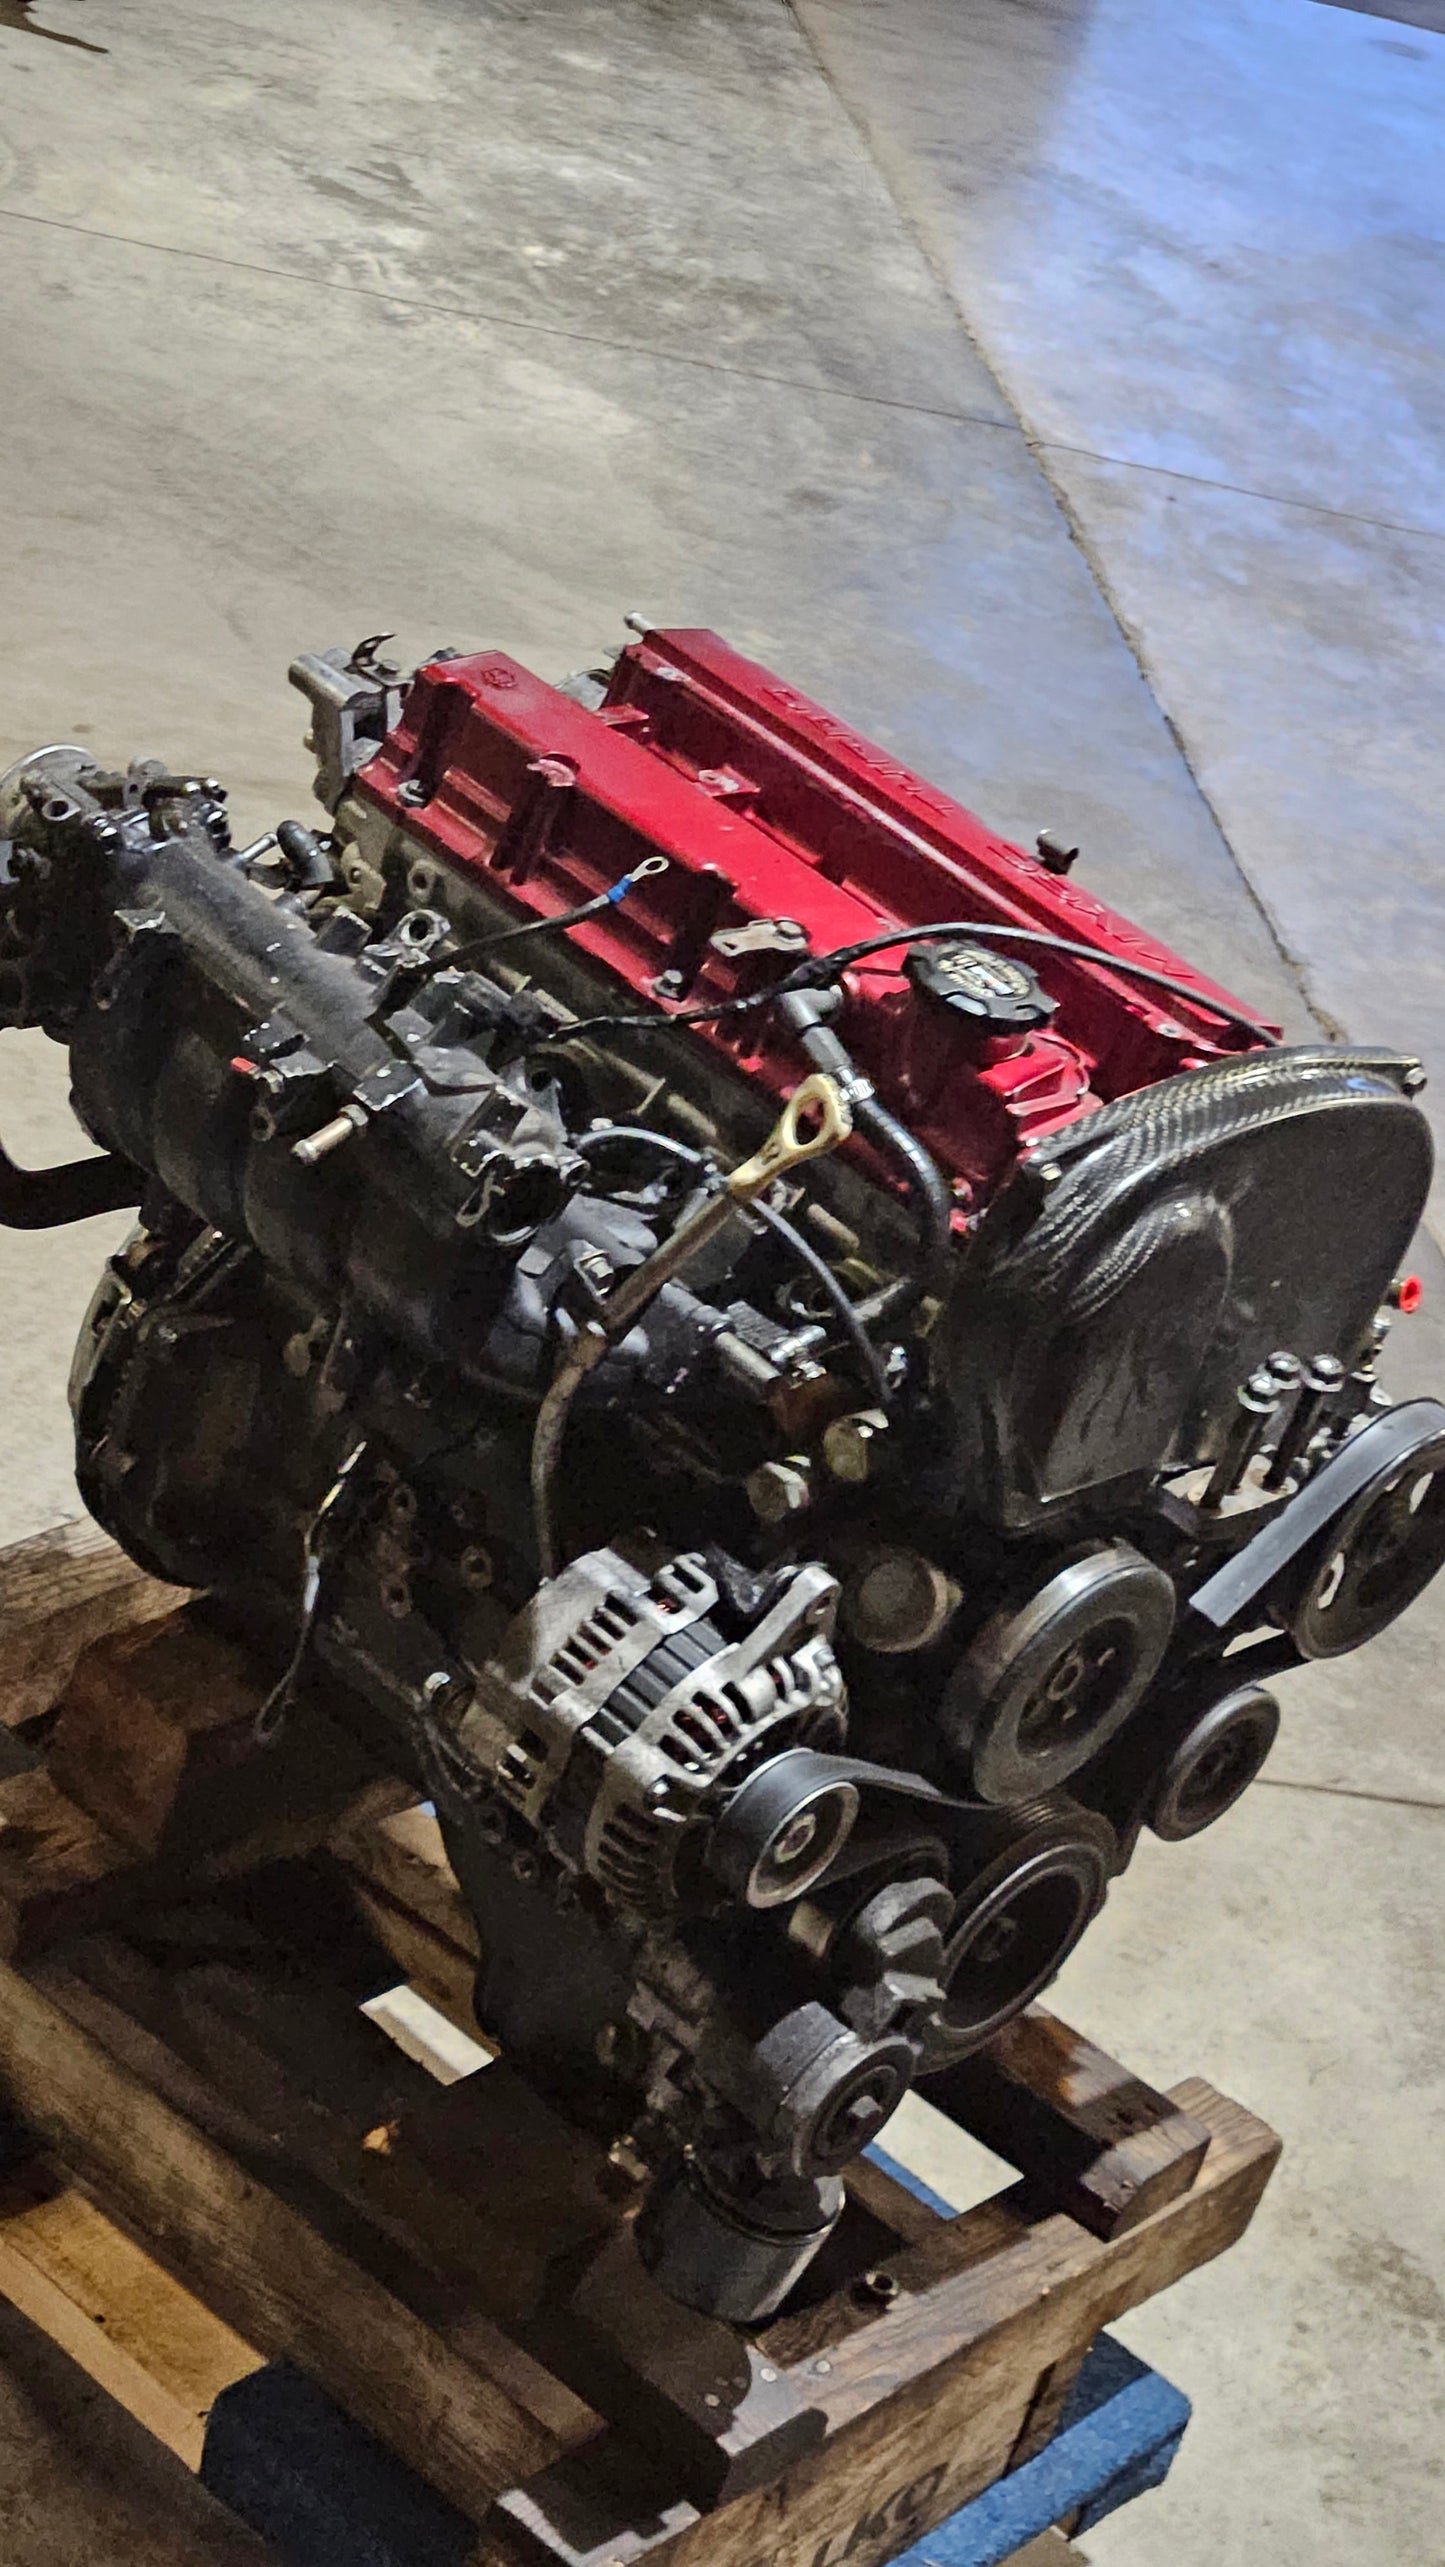 Evo 9 Mivec Longblock Engine